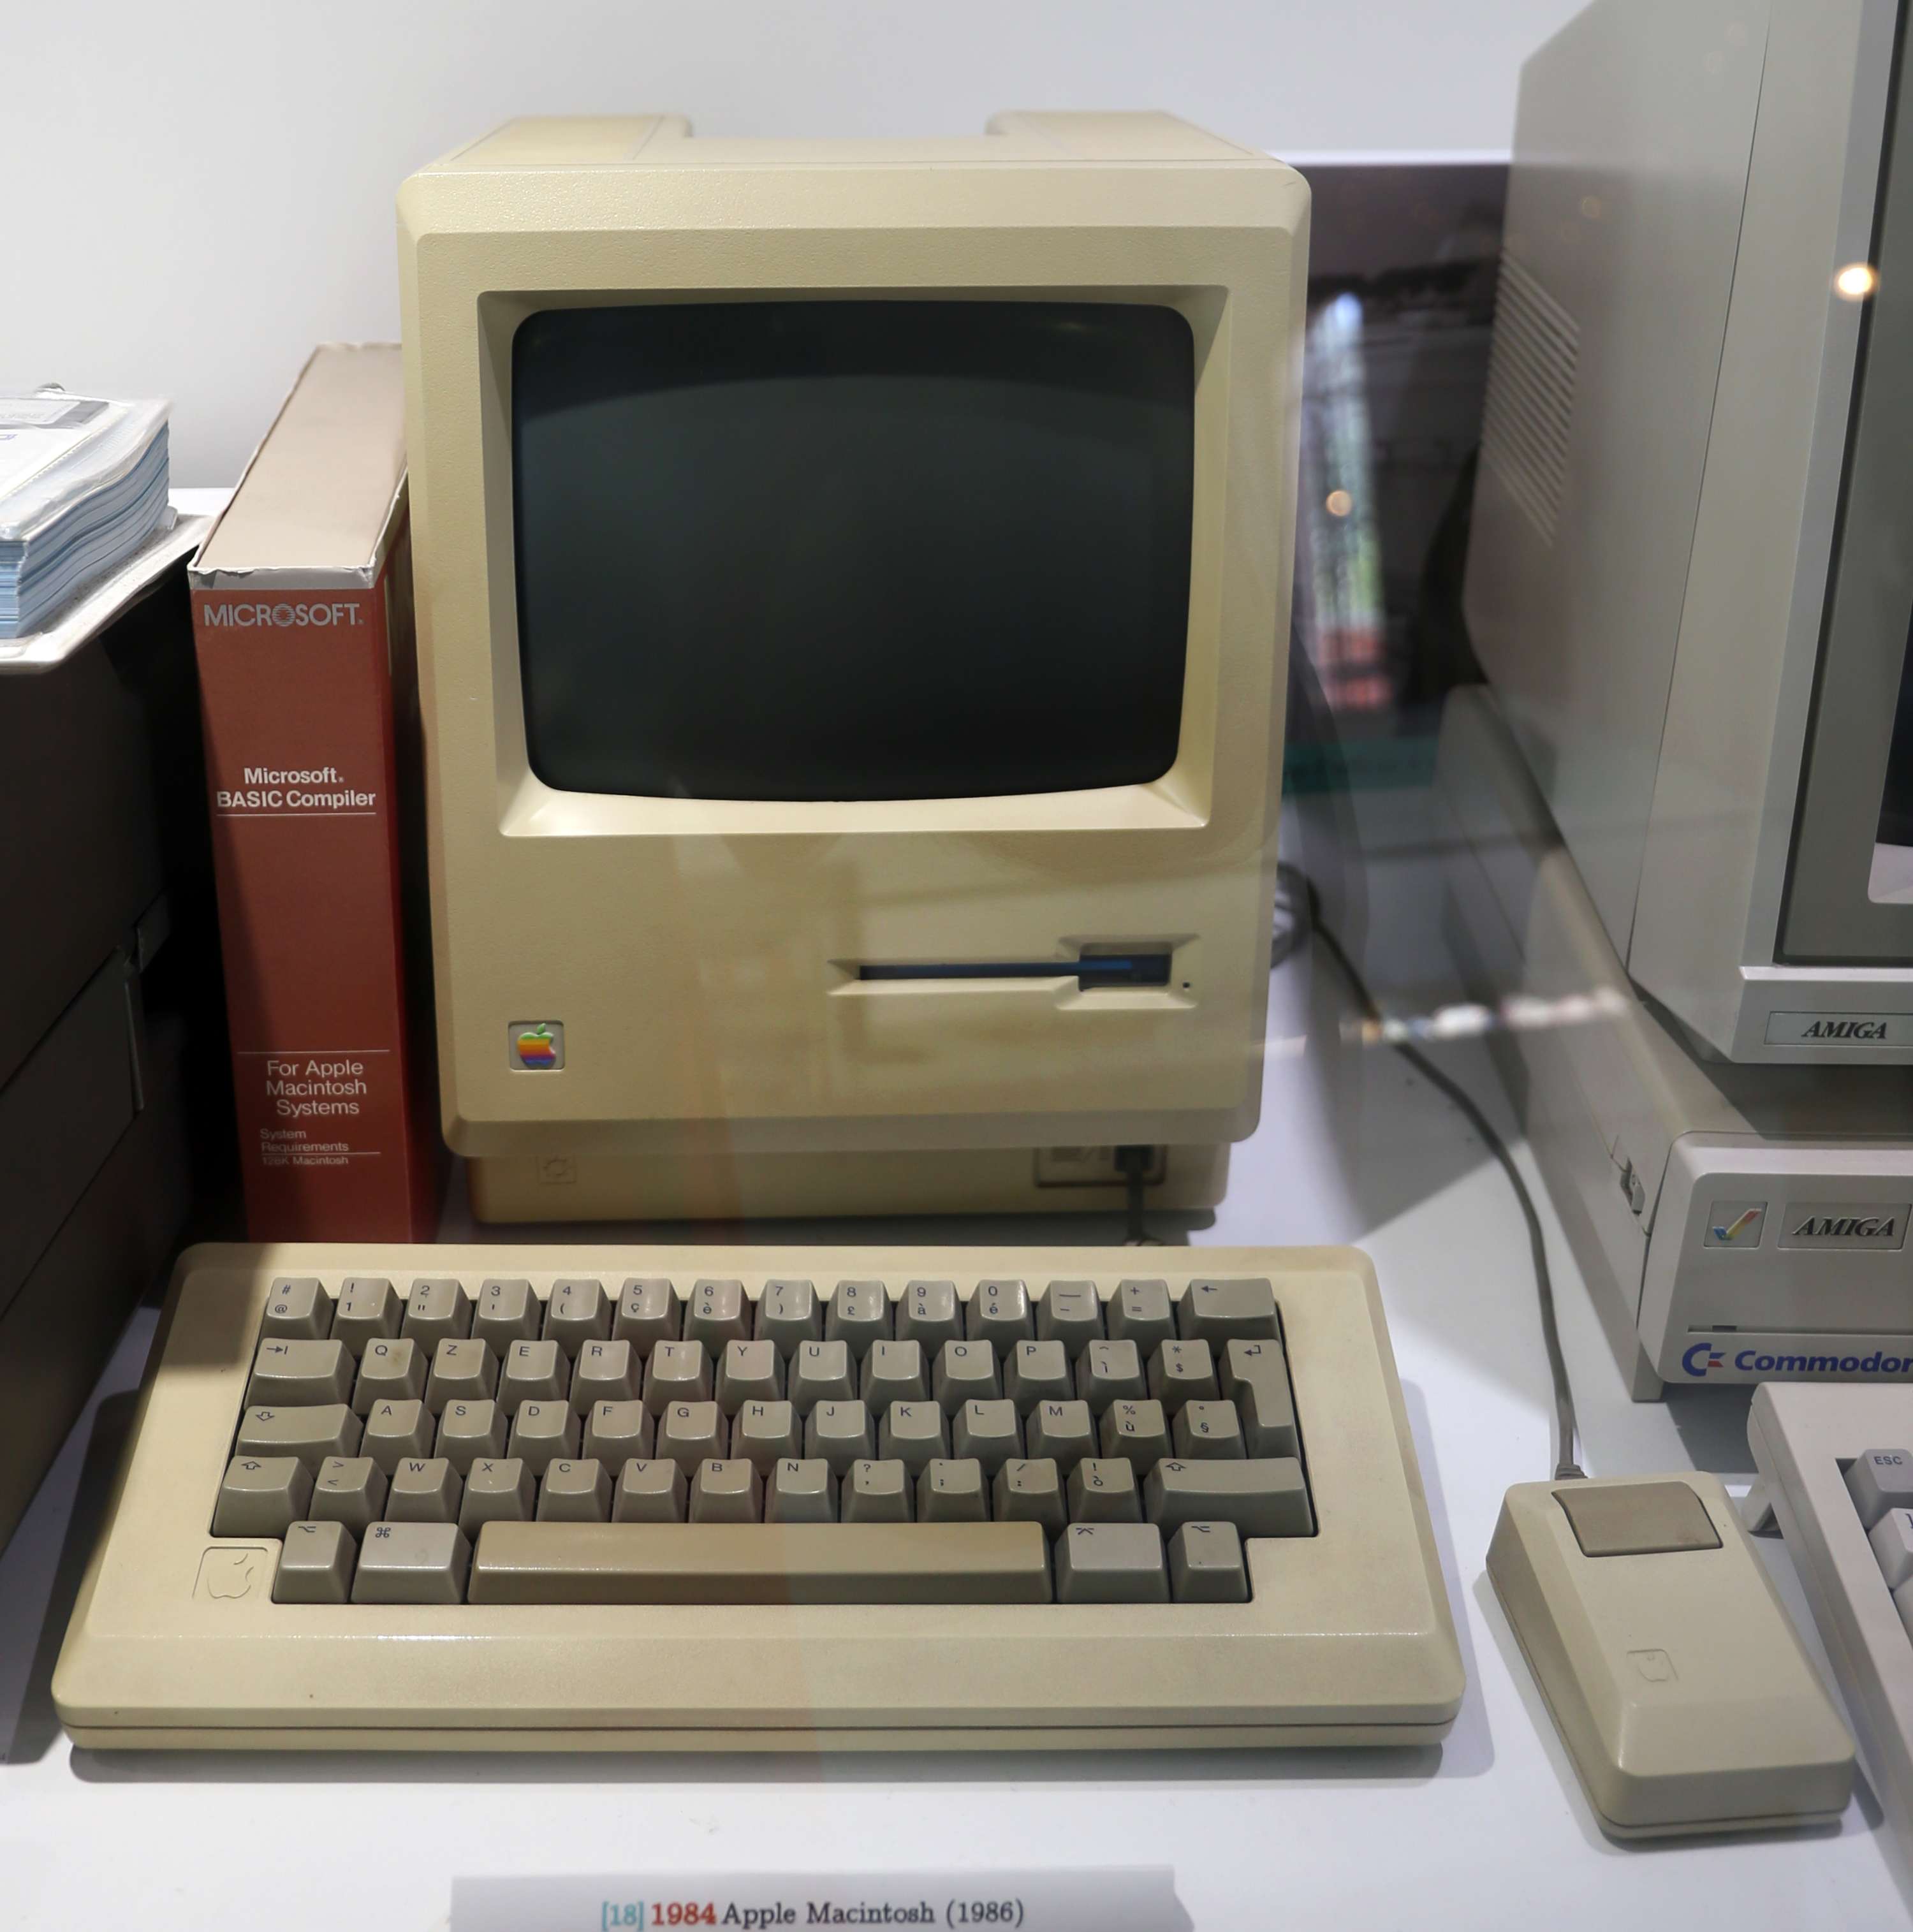 File:Apple macintosh, personal computer, 1984 (1986).jpg - Wikimedia Commons